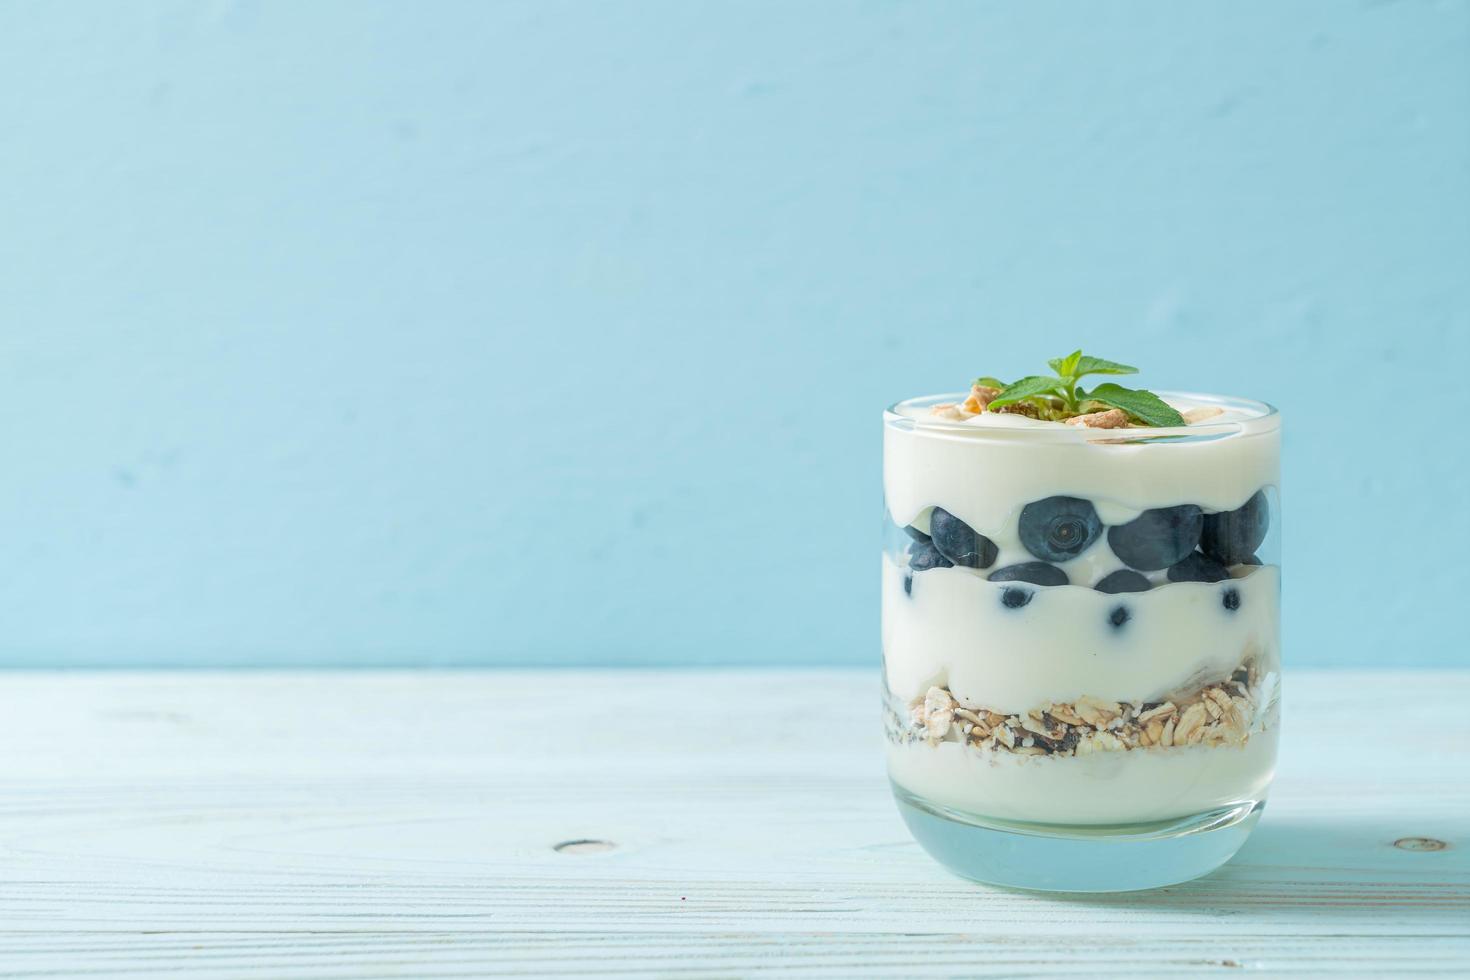 Fresh blueberries and yogurt with granola - Healthy food style photo